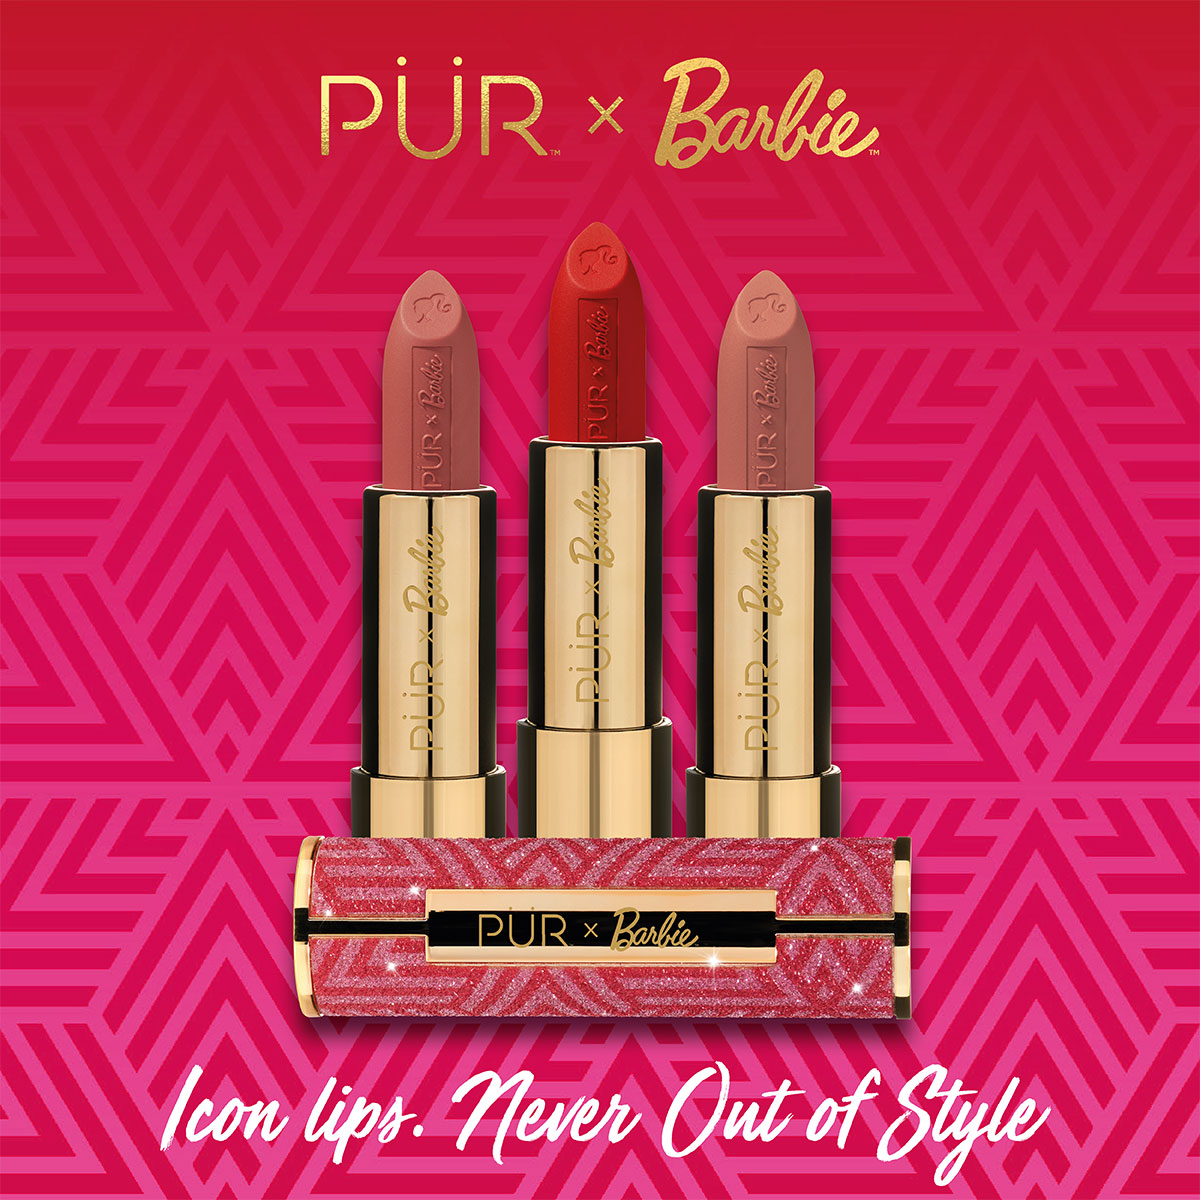 PUR X Barbie Iconic Lips Innovator rosa lppstift - Hairsale.se